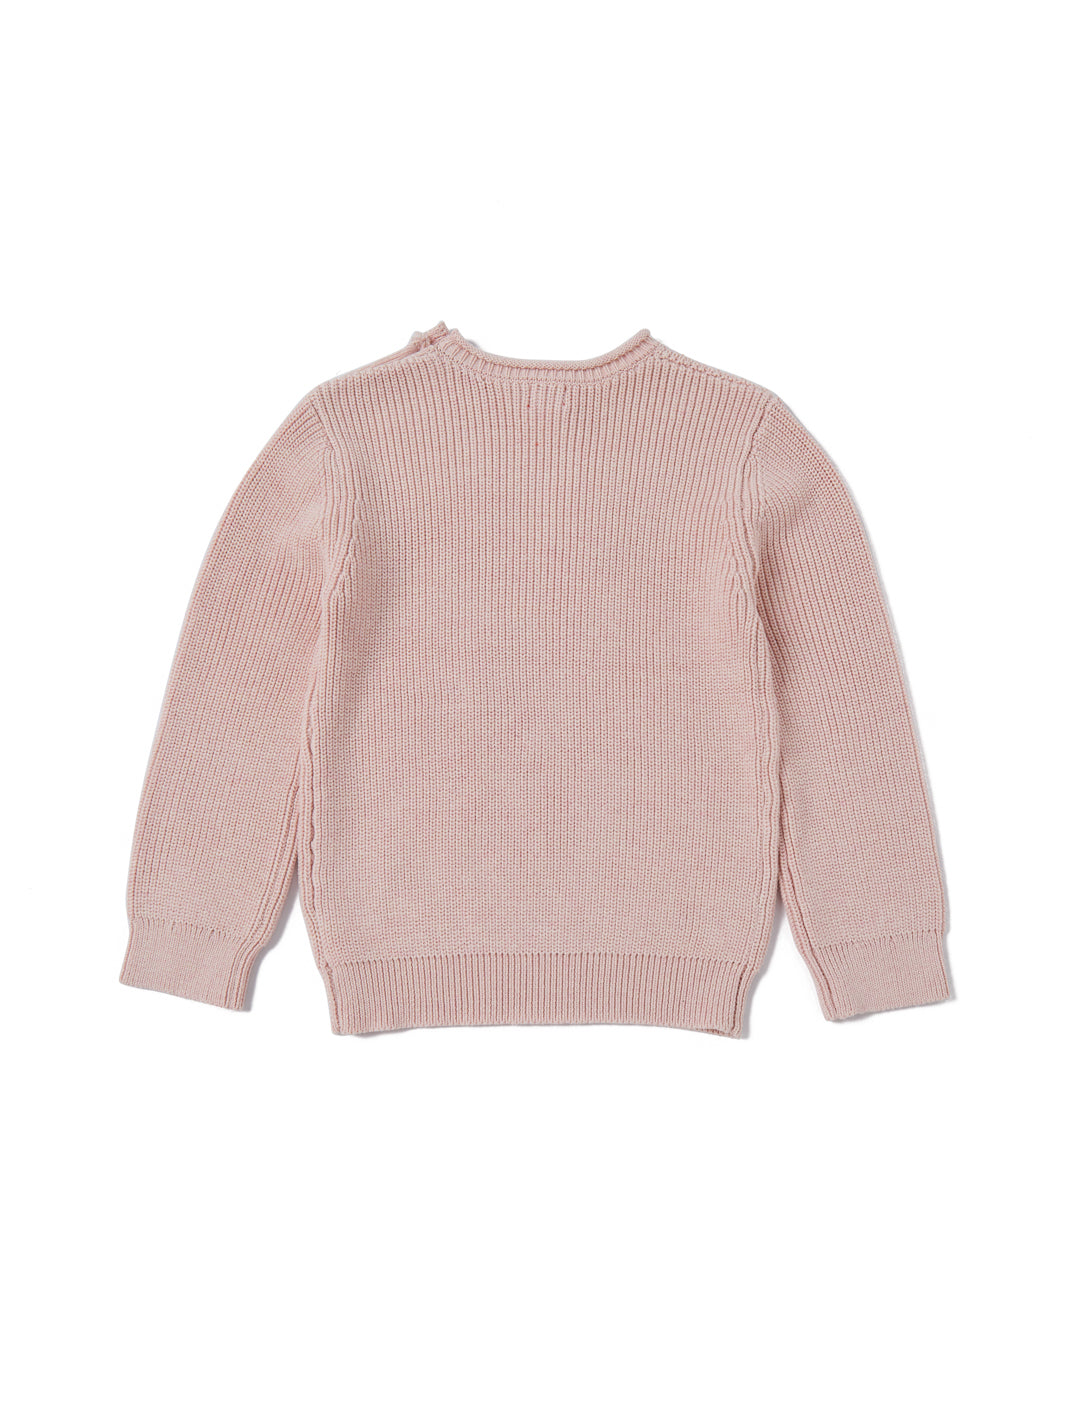 Heart Print Sweater - Powder Pink